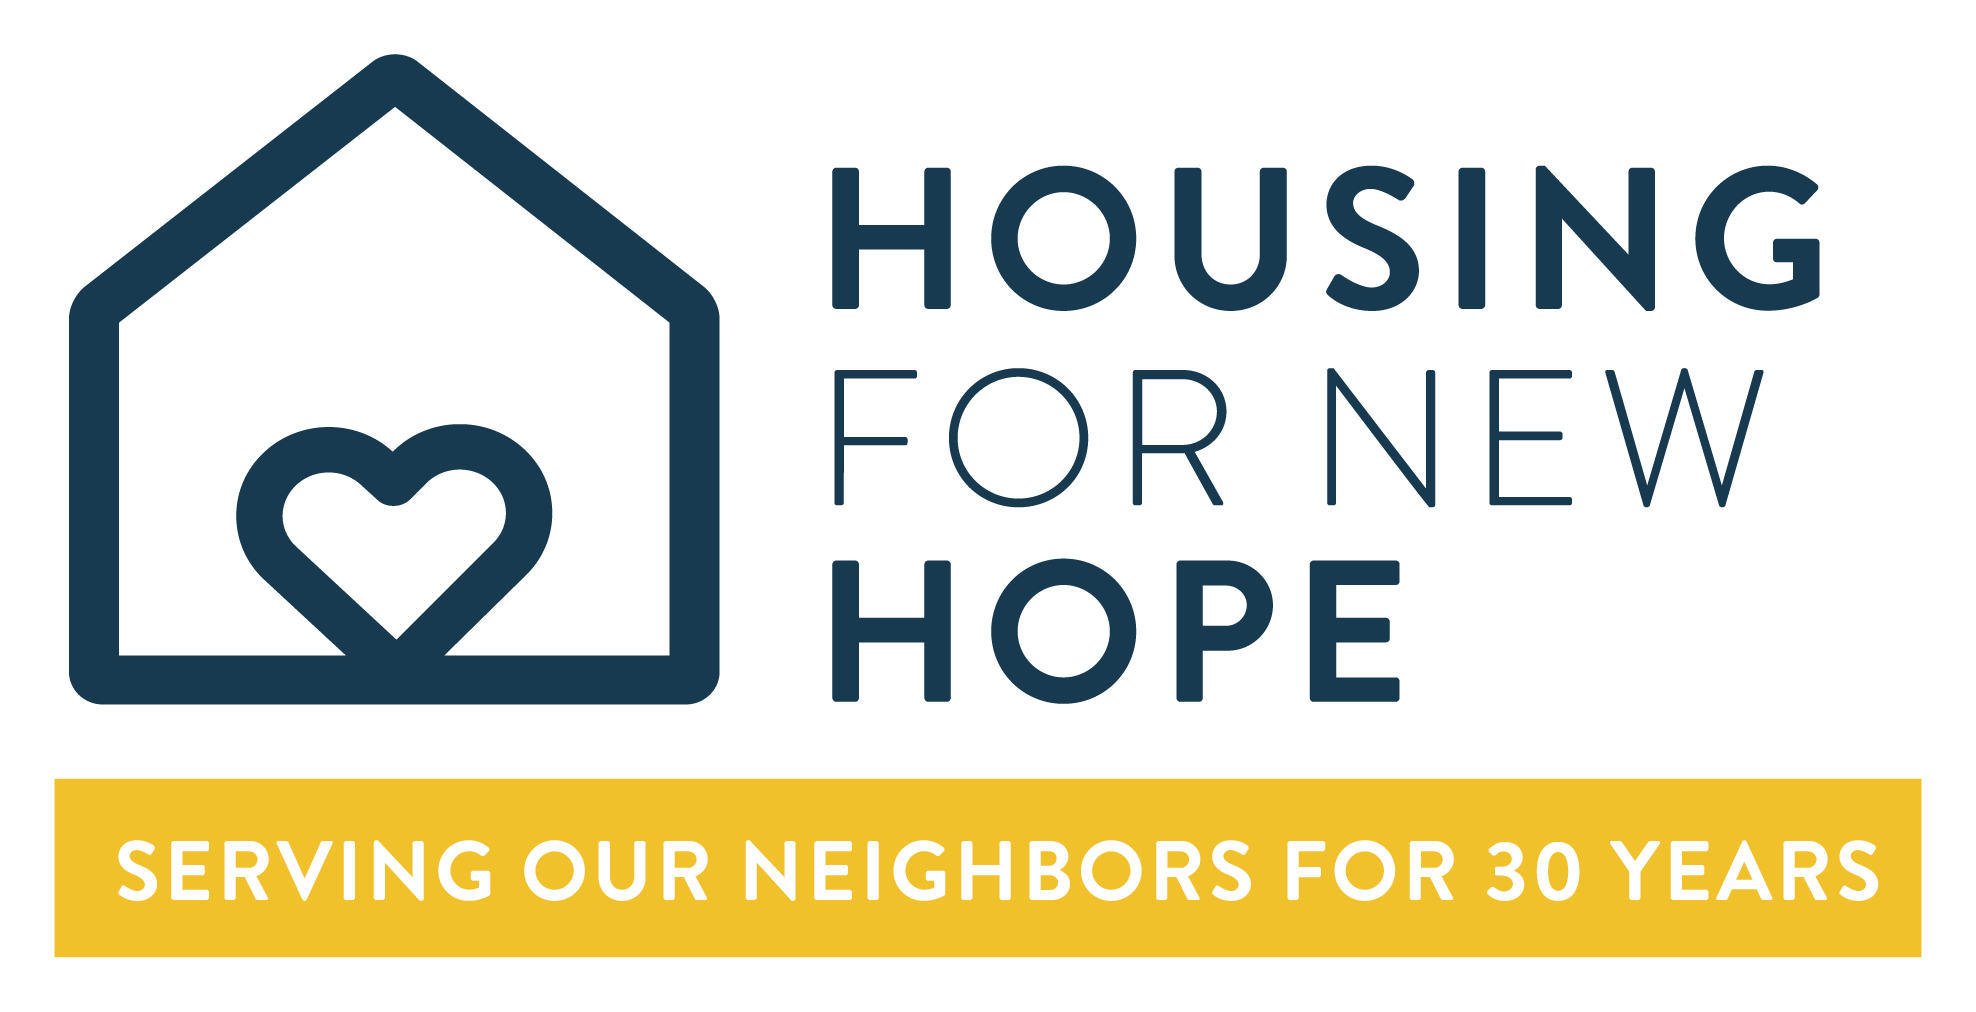 HousingForNewHope logo